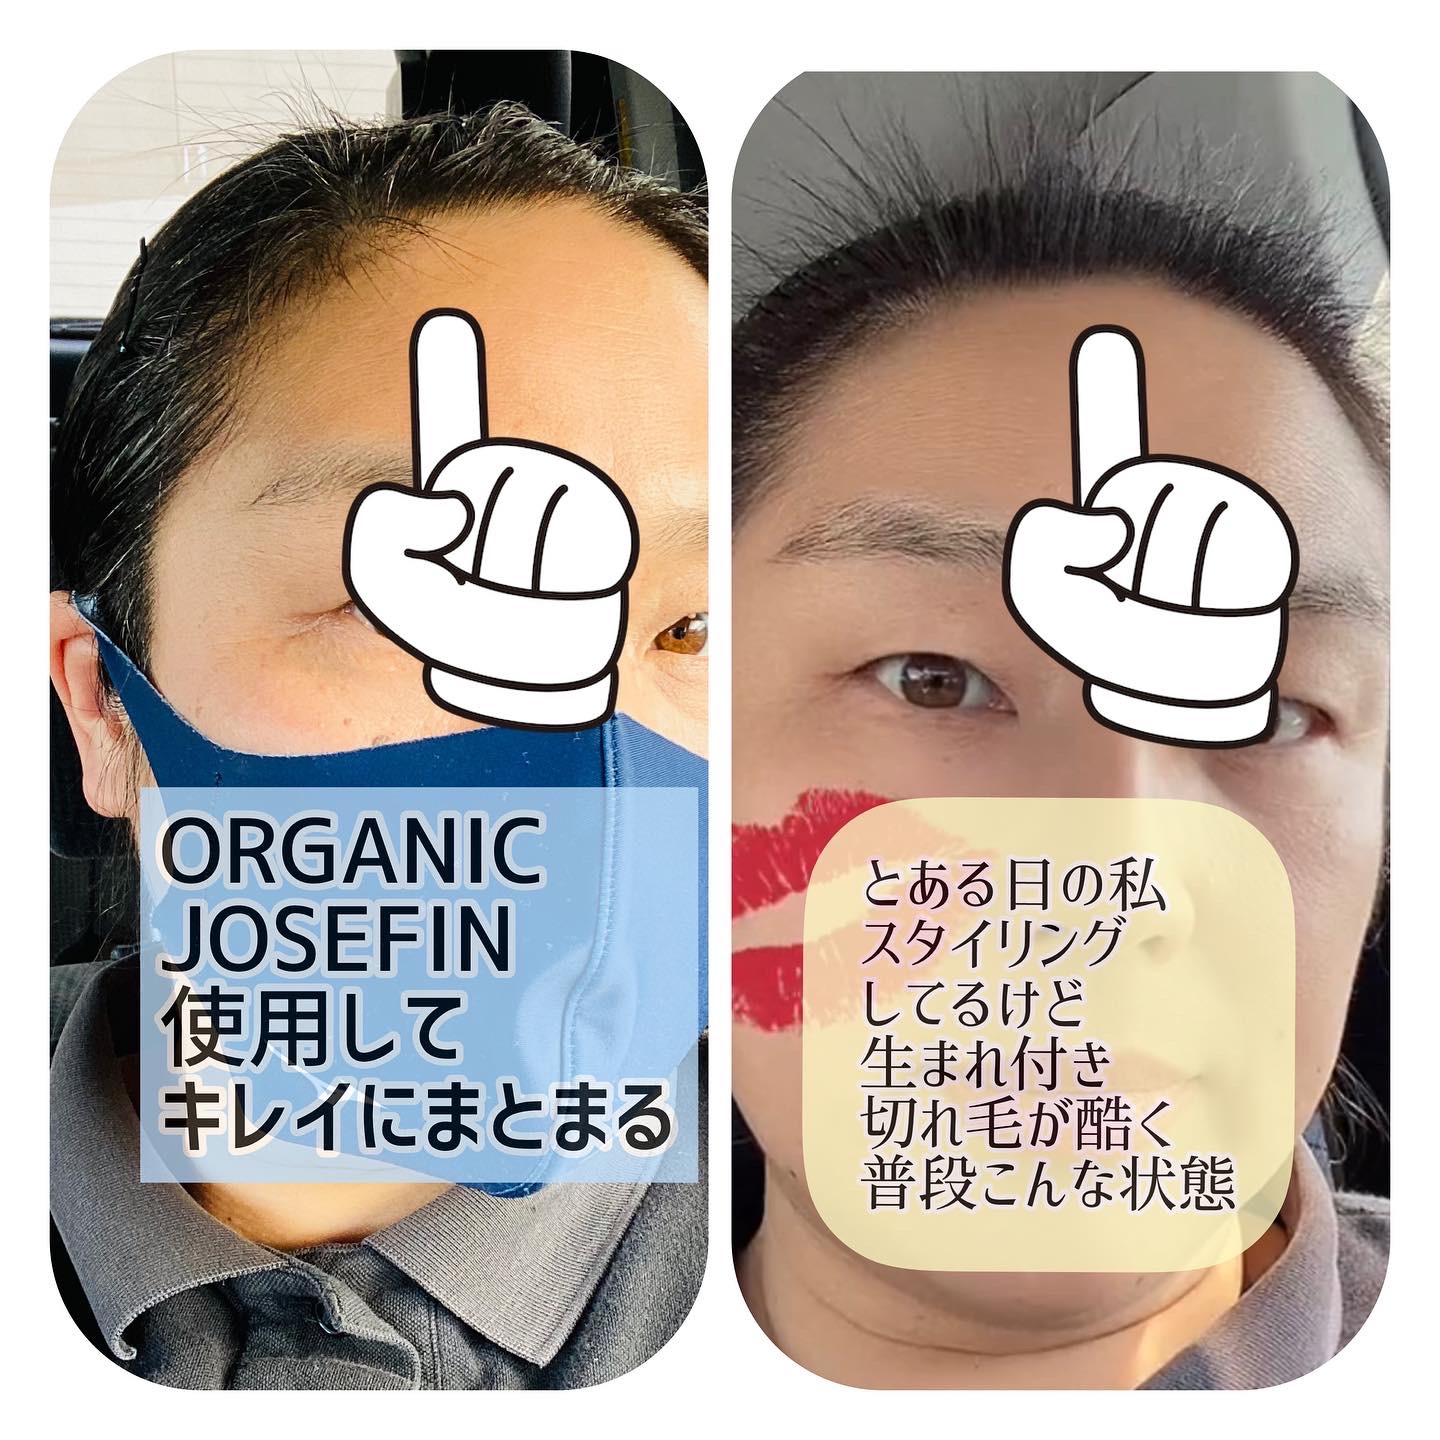 ORGANIC JOSEFIN(オーガニックジョセフィン) ナチュラルオイルの良い点・メリットに関するマイピコブーさんの口コミ画像1